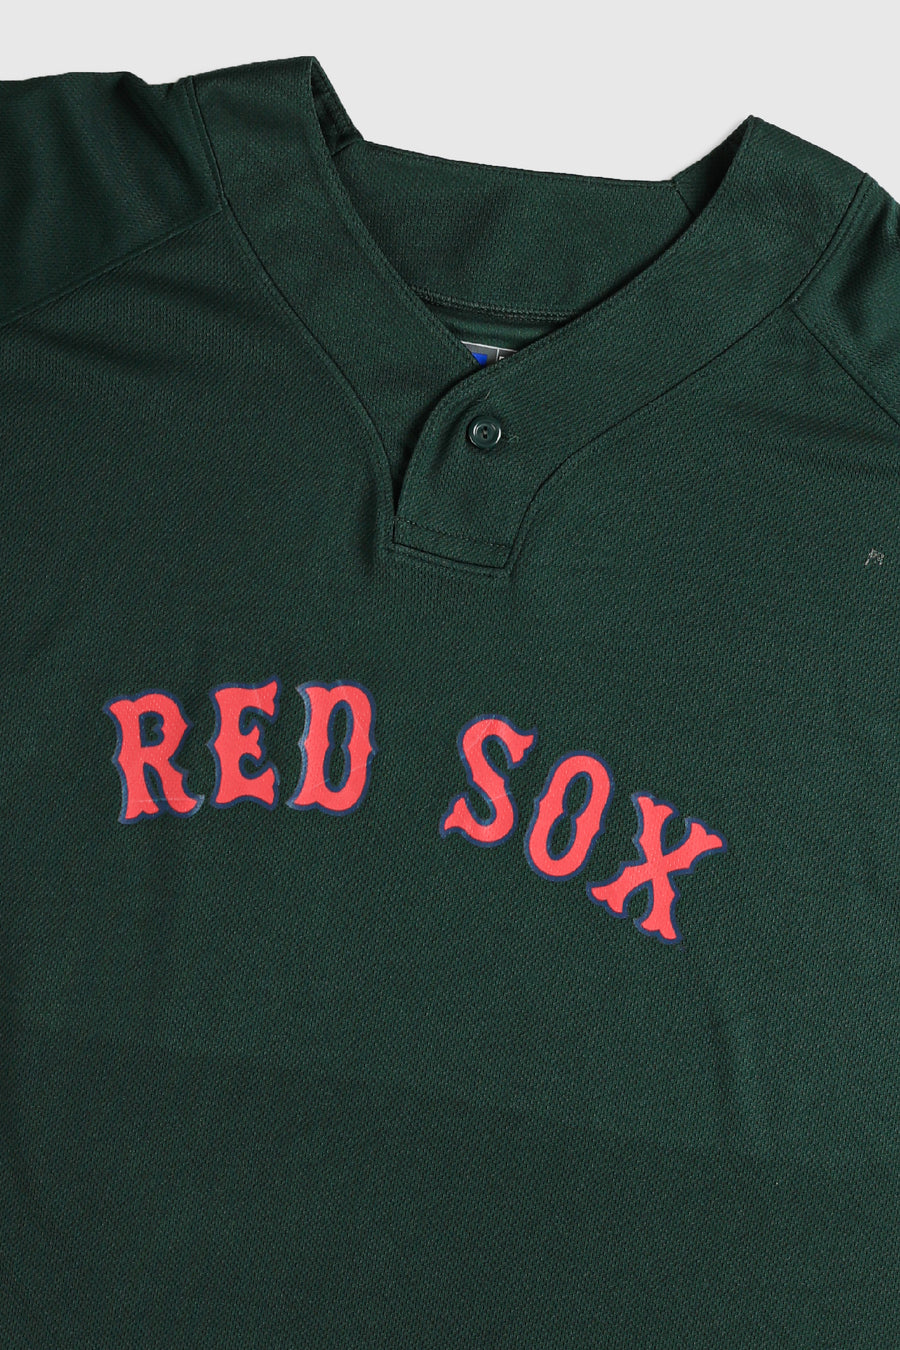 Vintage Red Sox MLB Baseball Jersey